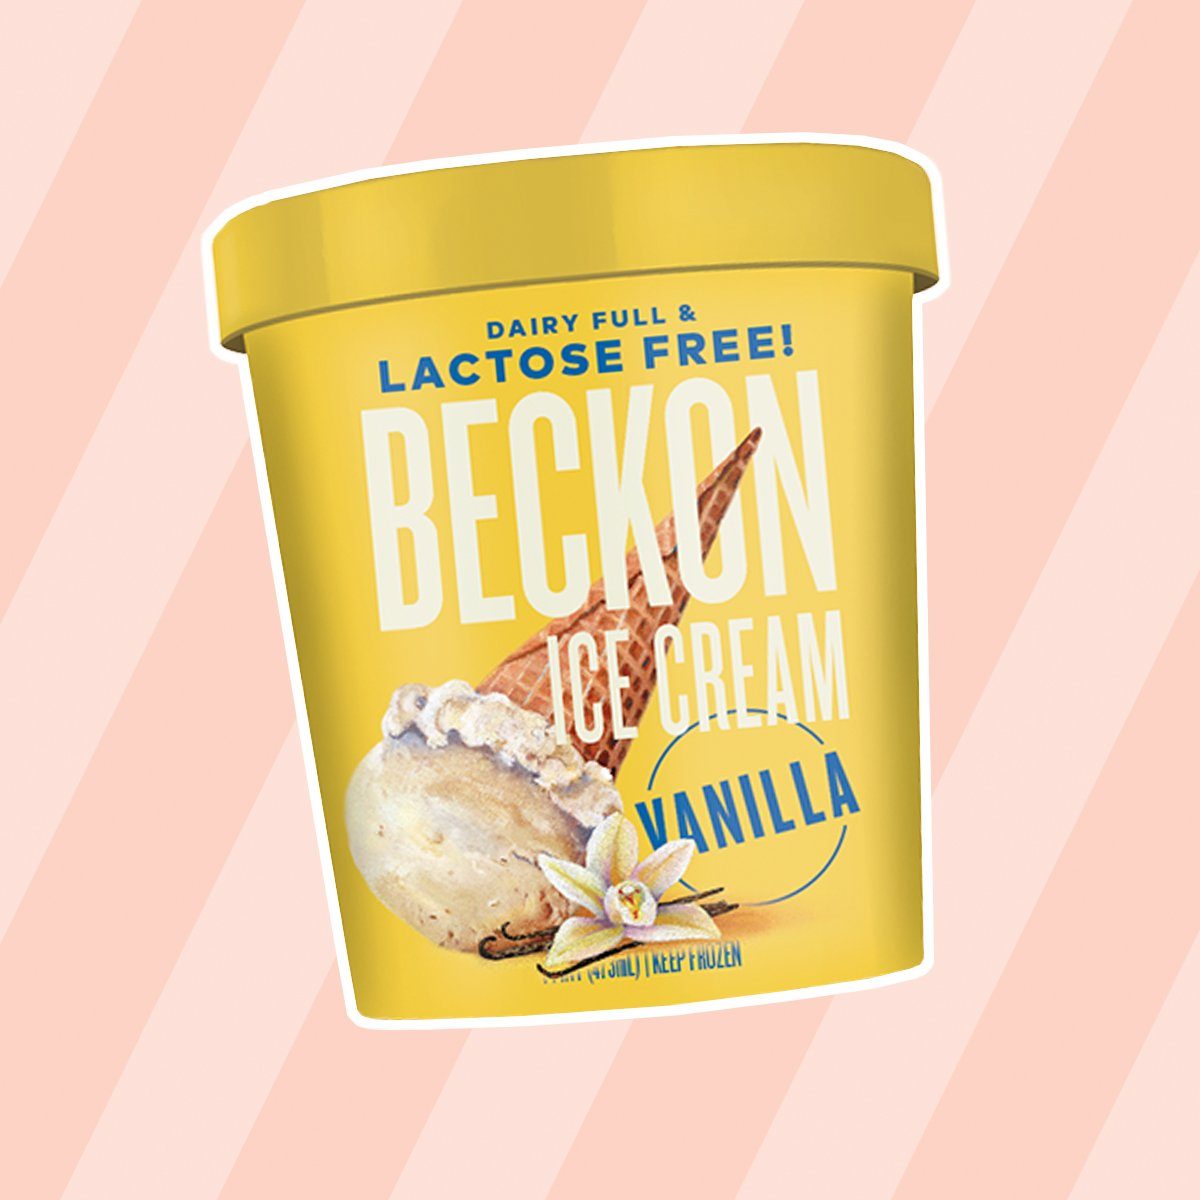 Beckon Ice Cream